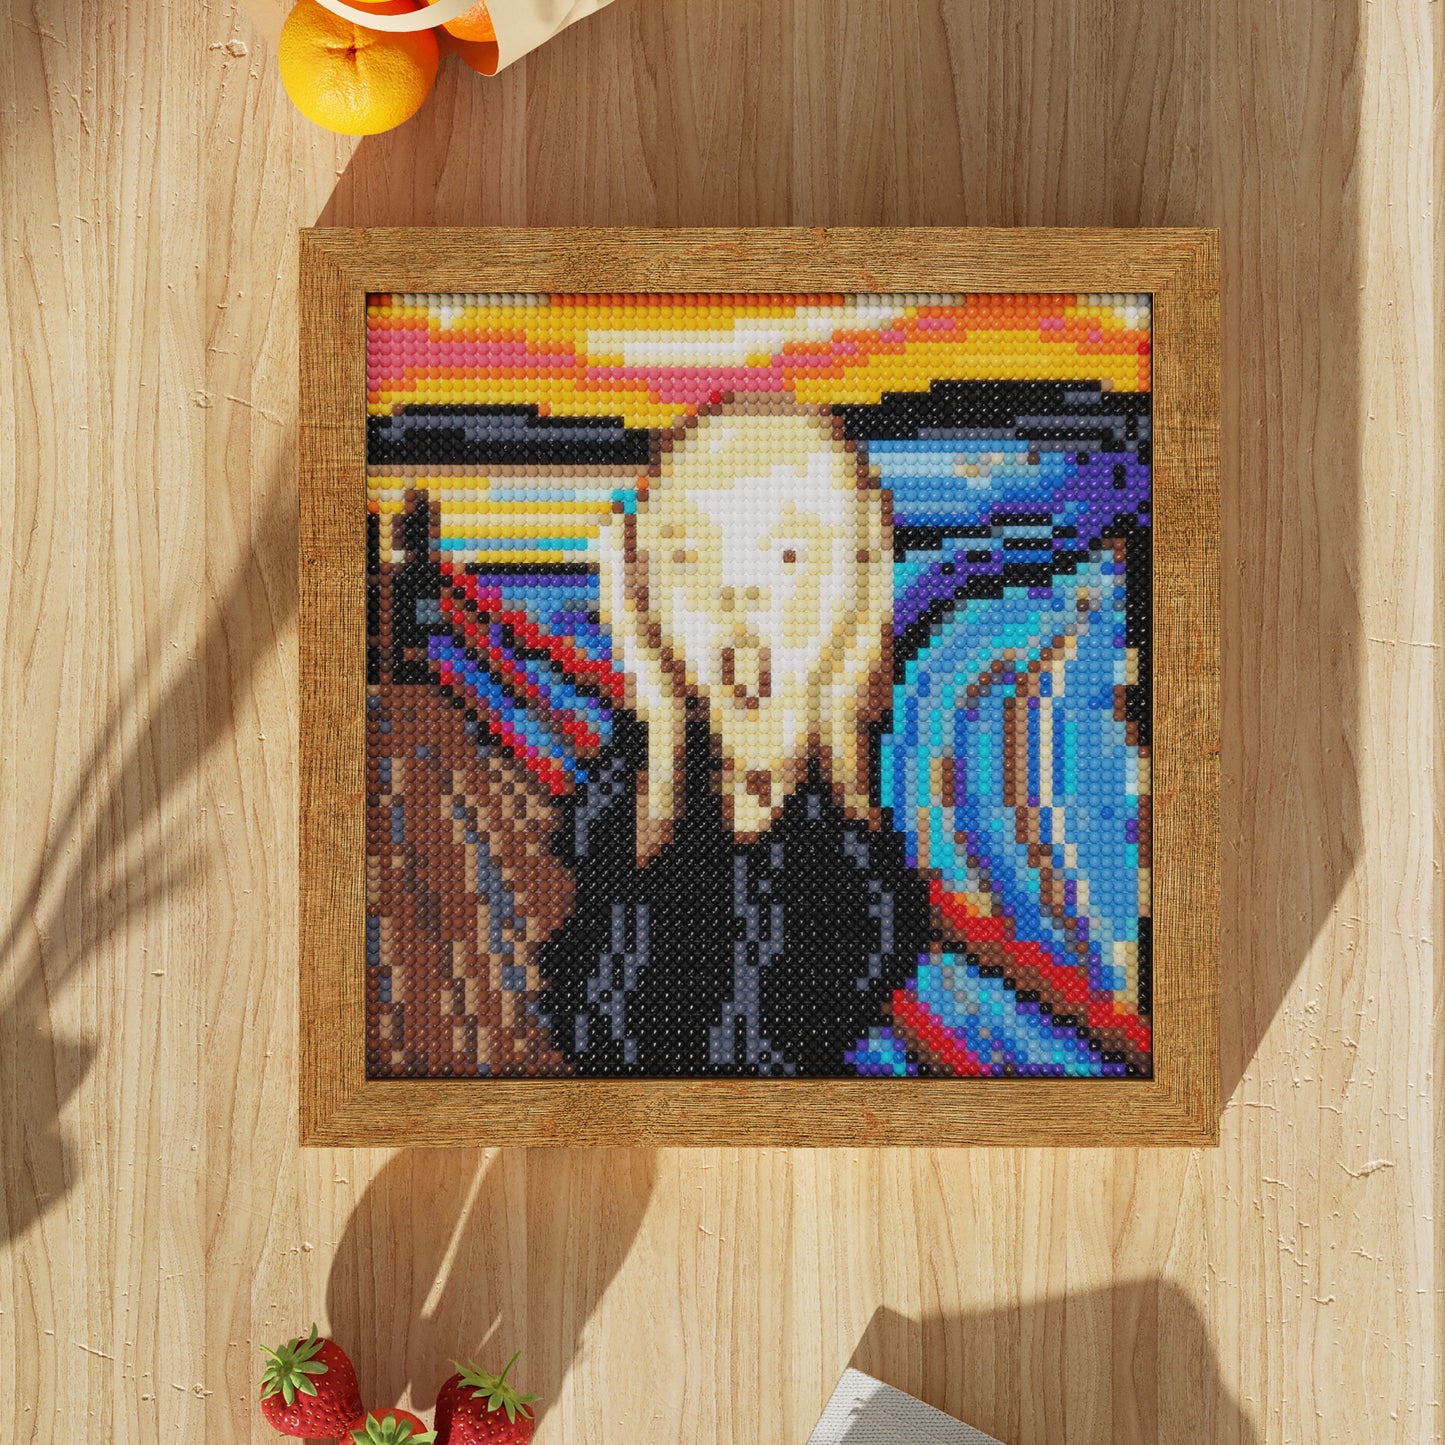 64x64 Pixel "The Scream by Edvard Munch" Diamond Painting Cross Stitch Kit